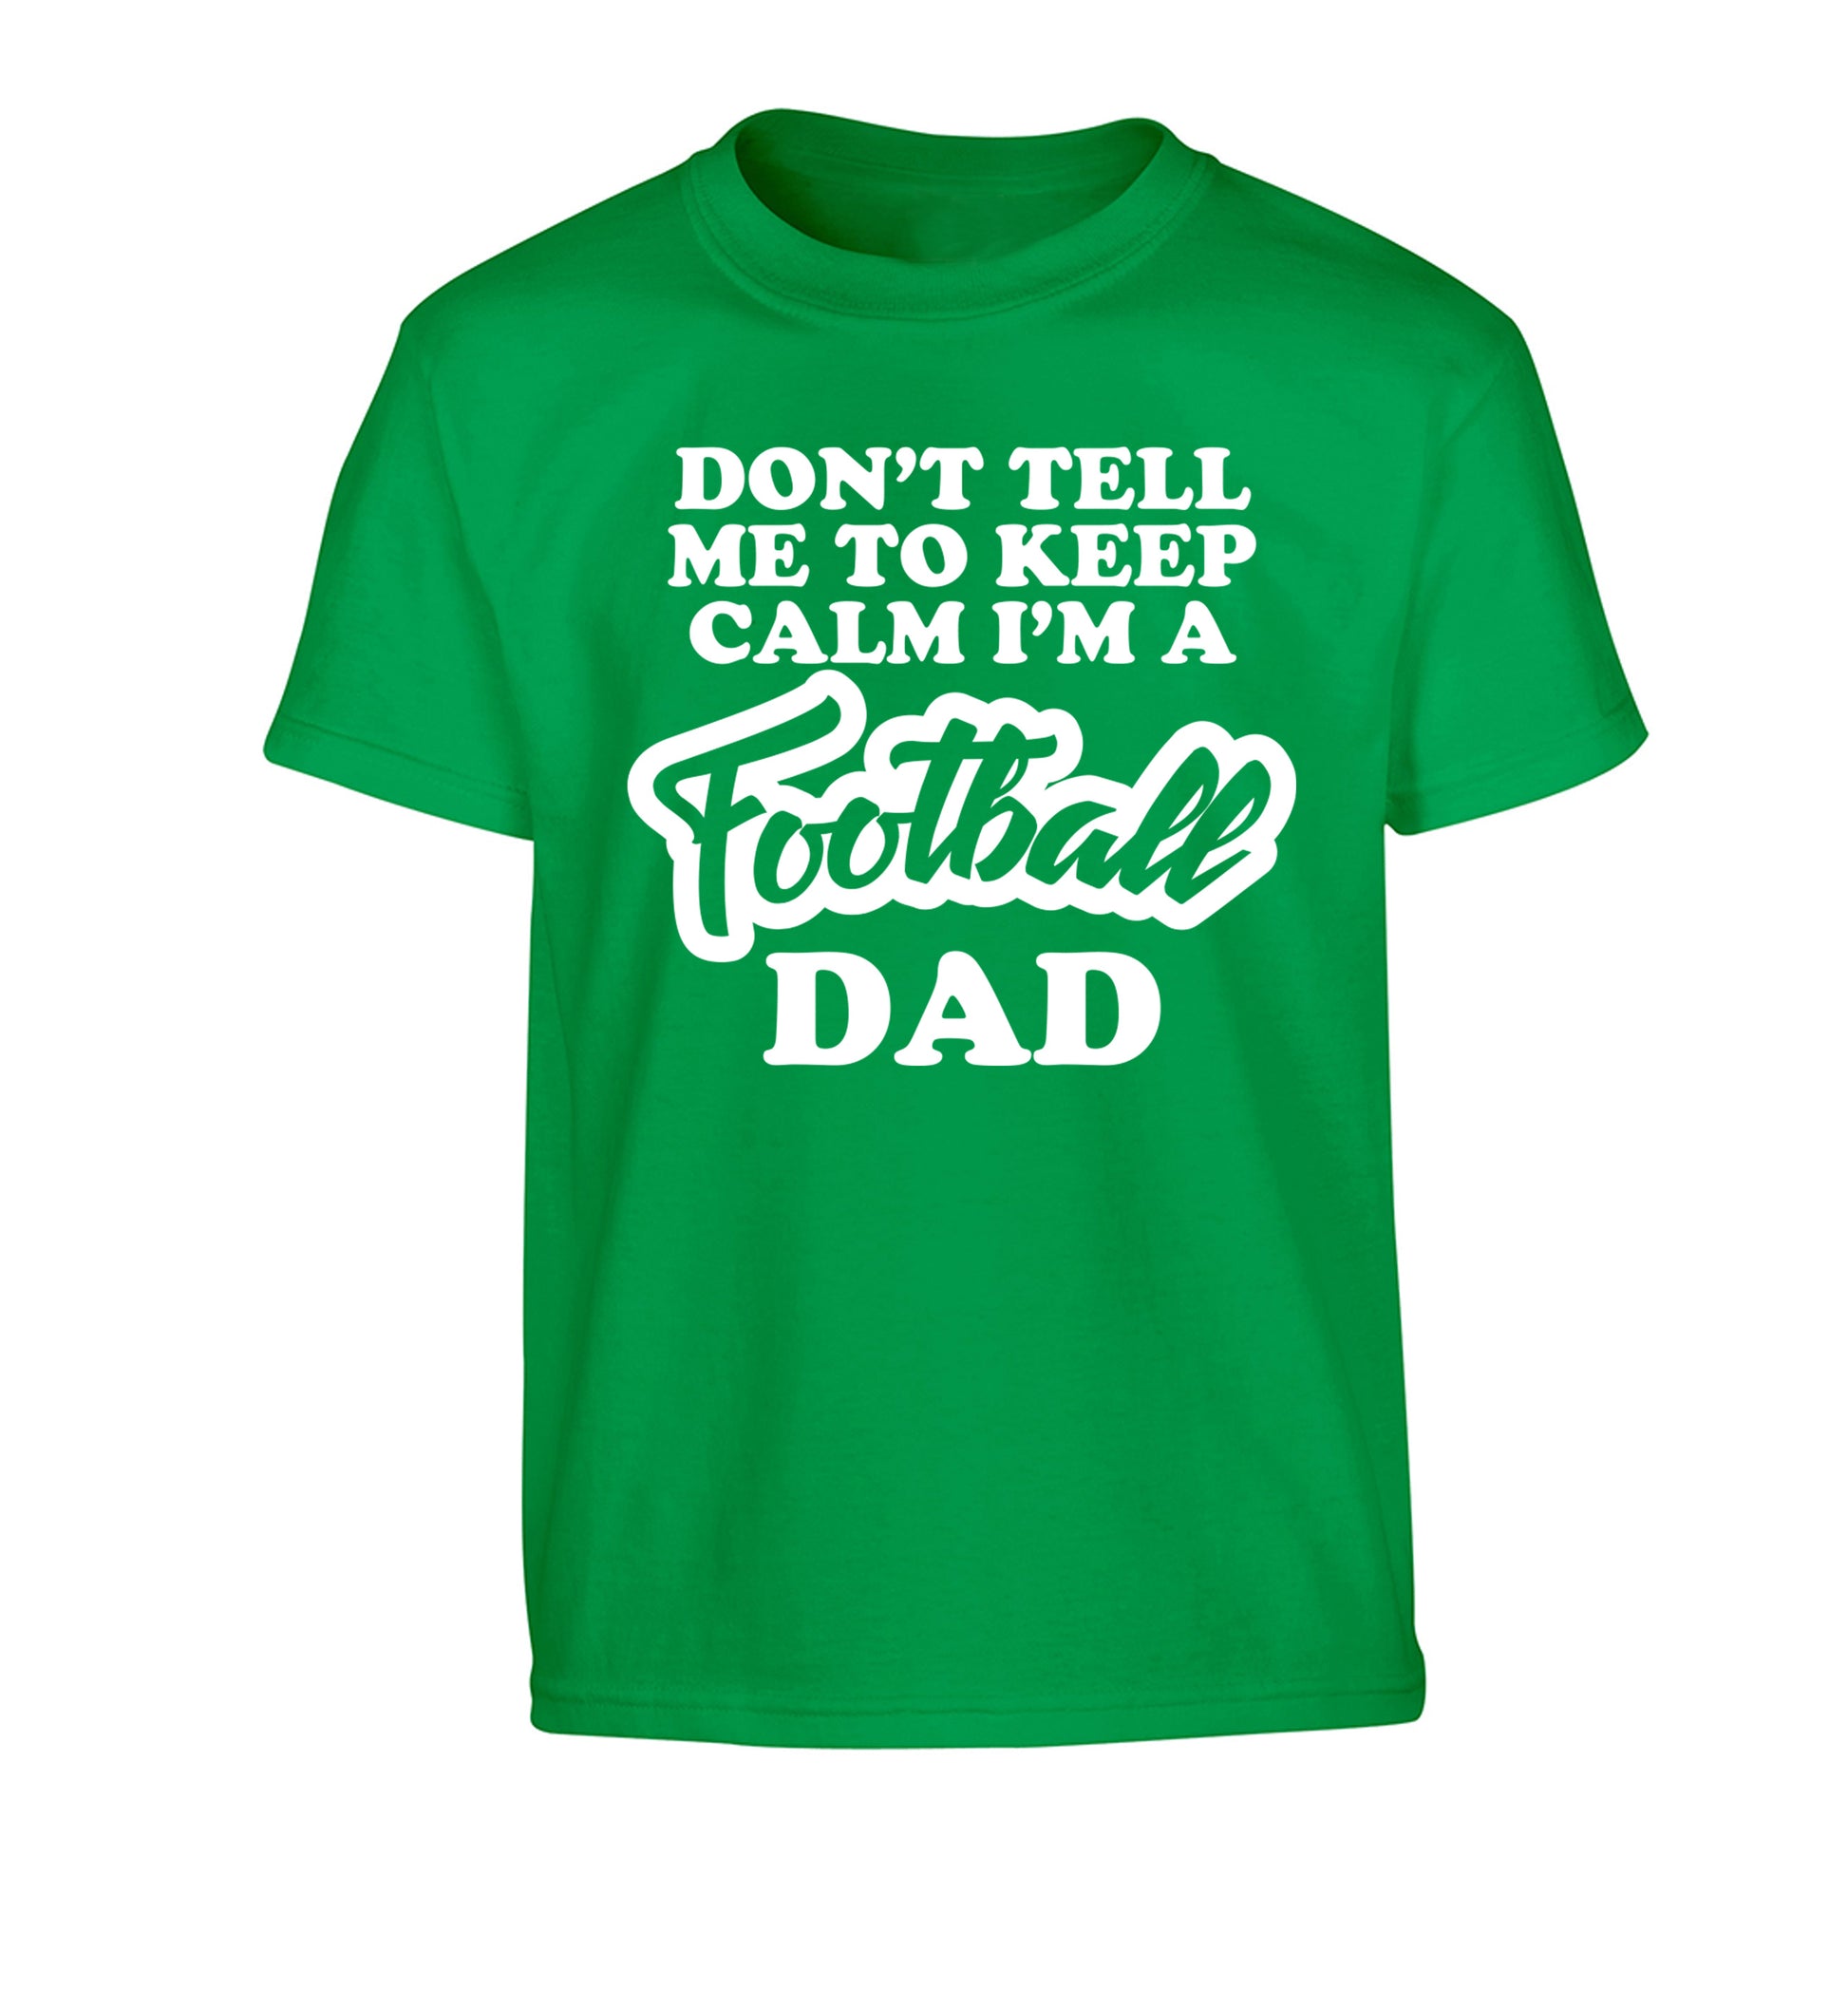 Don't tell me to keep calm I'm a football grandad Children's green Tshirt 12-14 Years